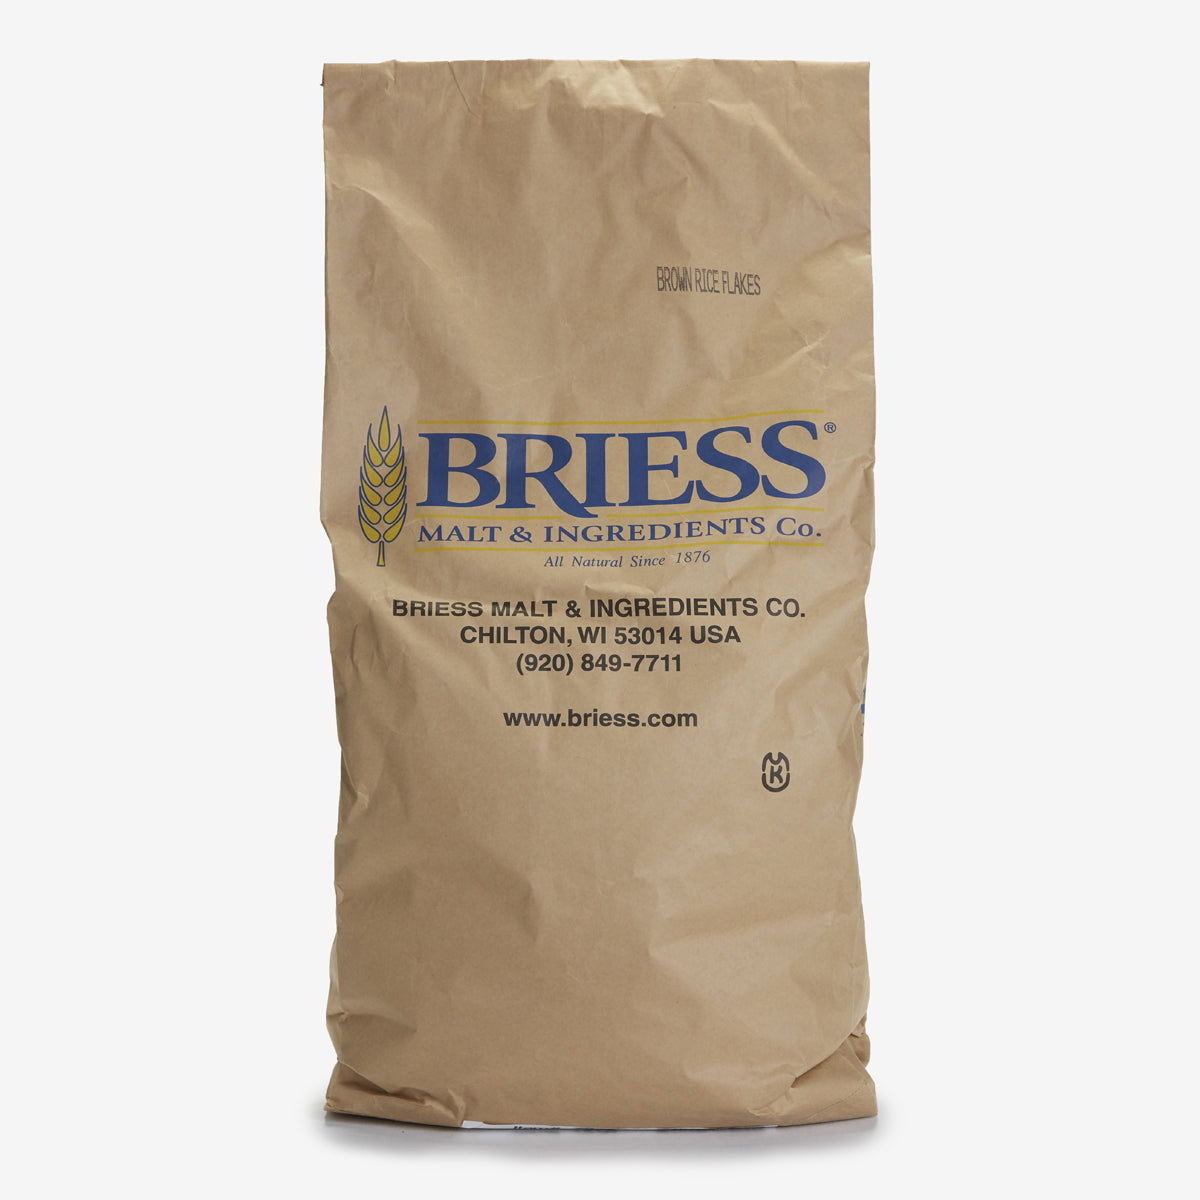 Briess Brown Rice Flakes